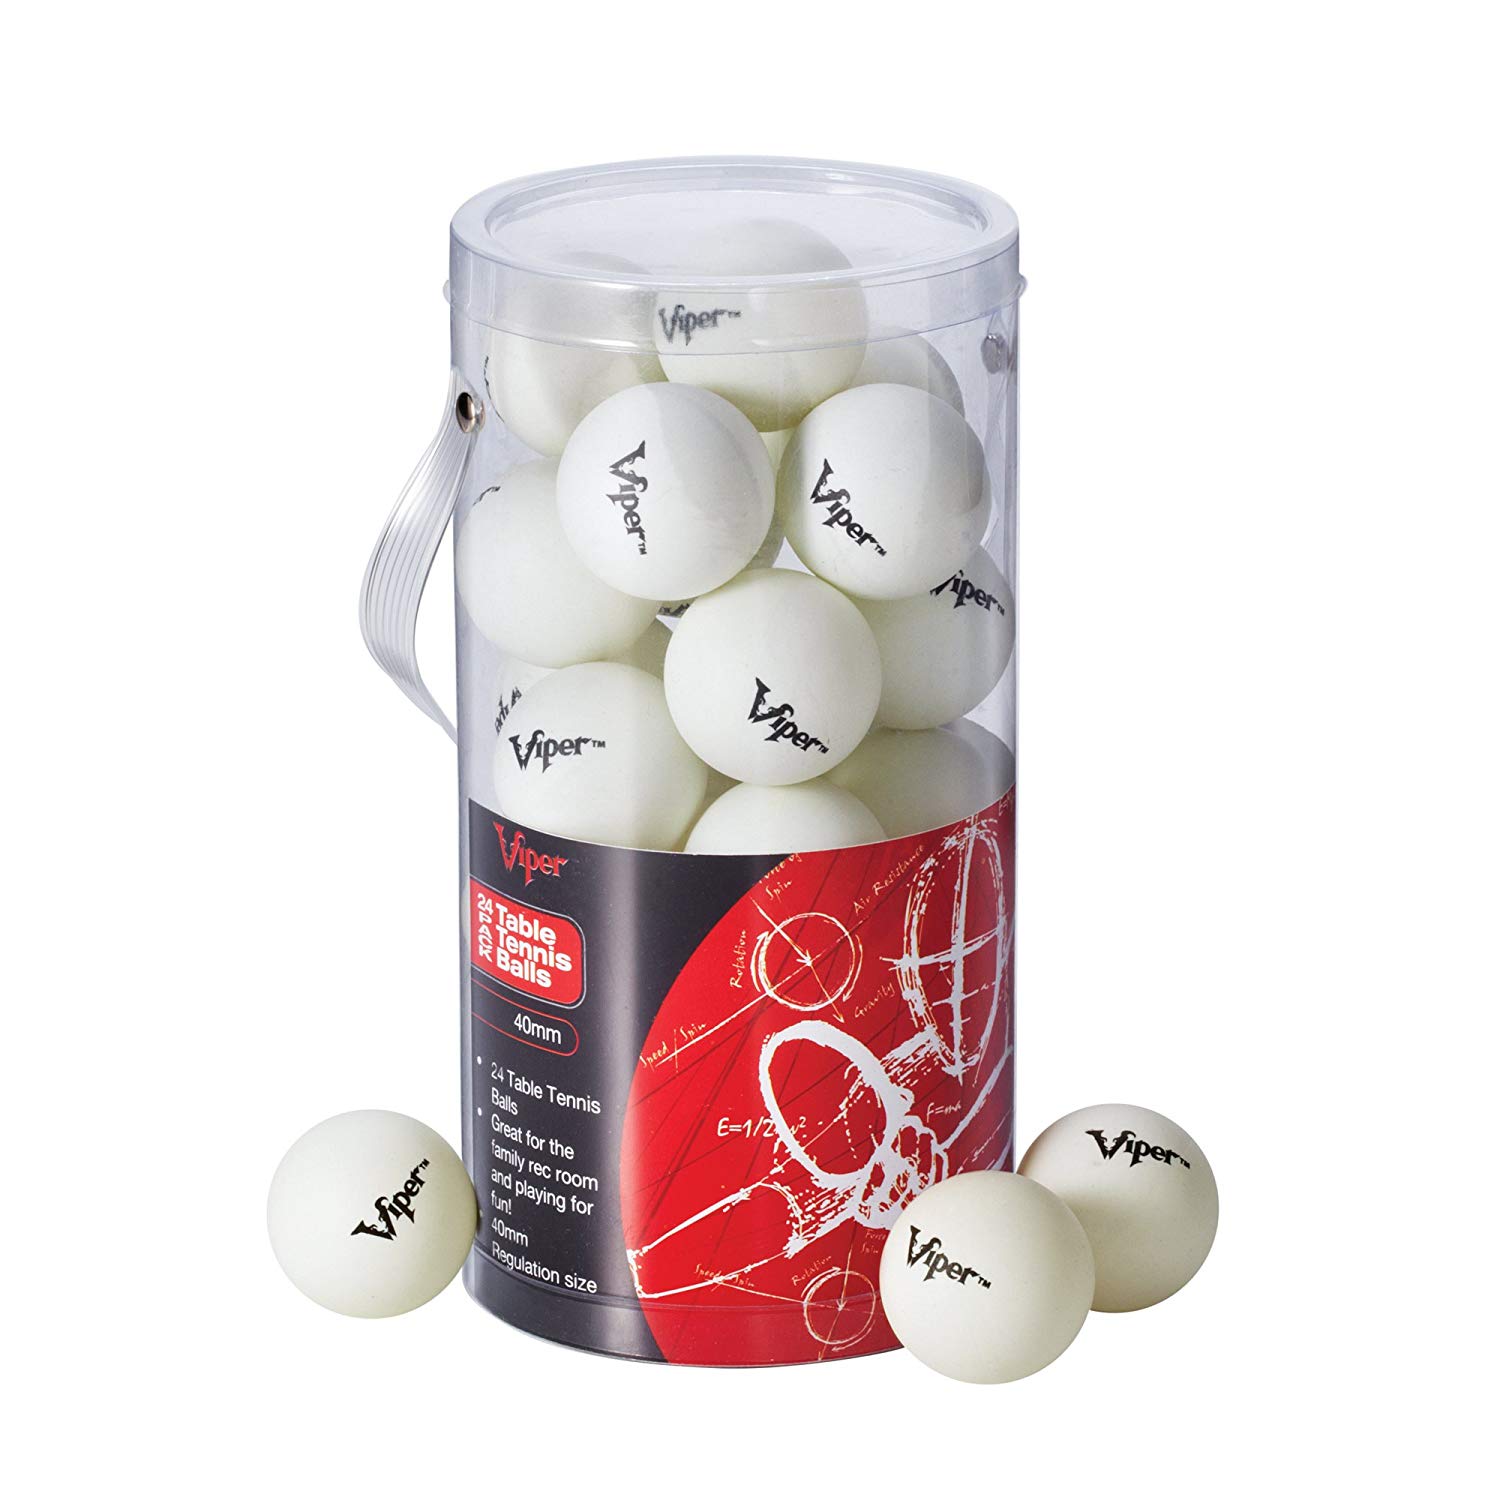 Viper Ping Pong Balls, Pack of 24